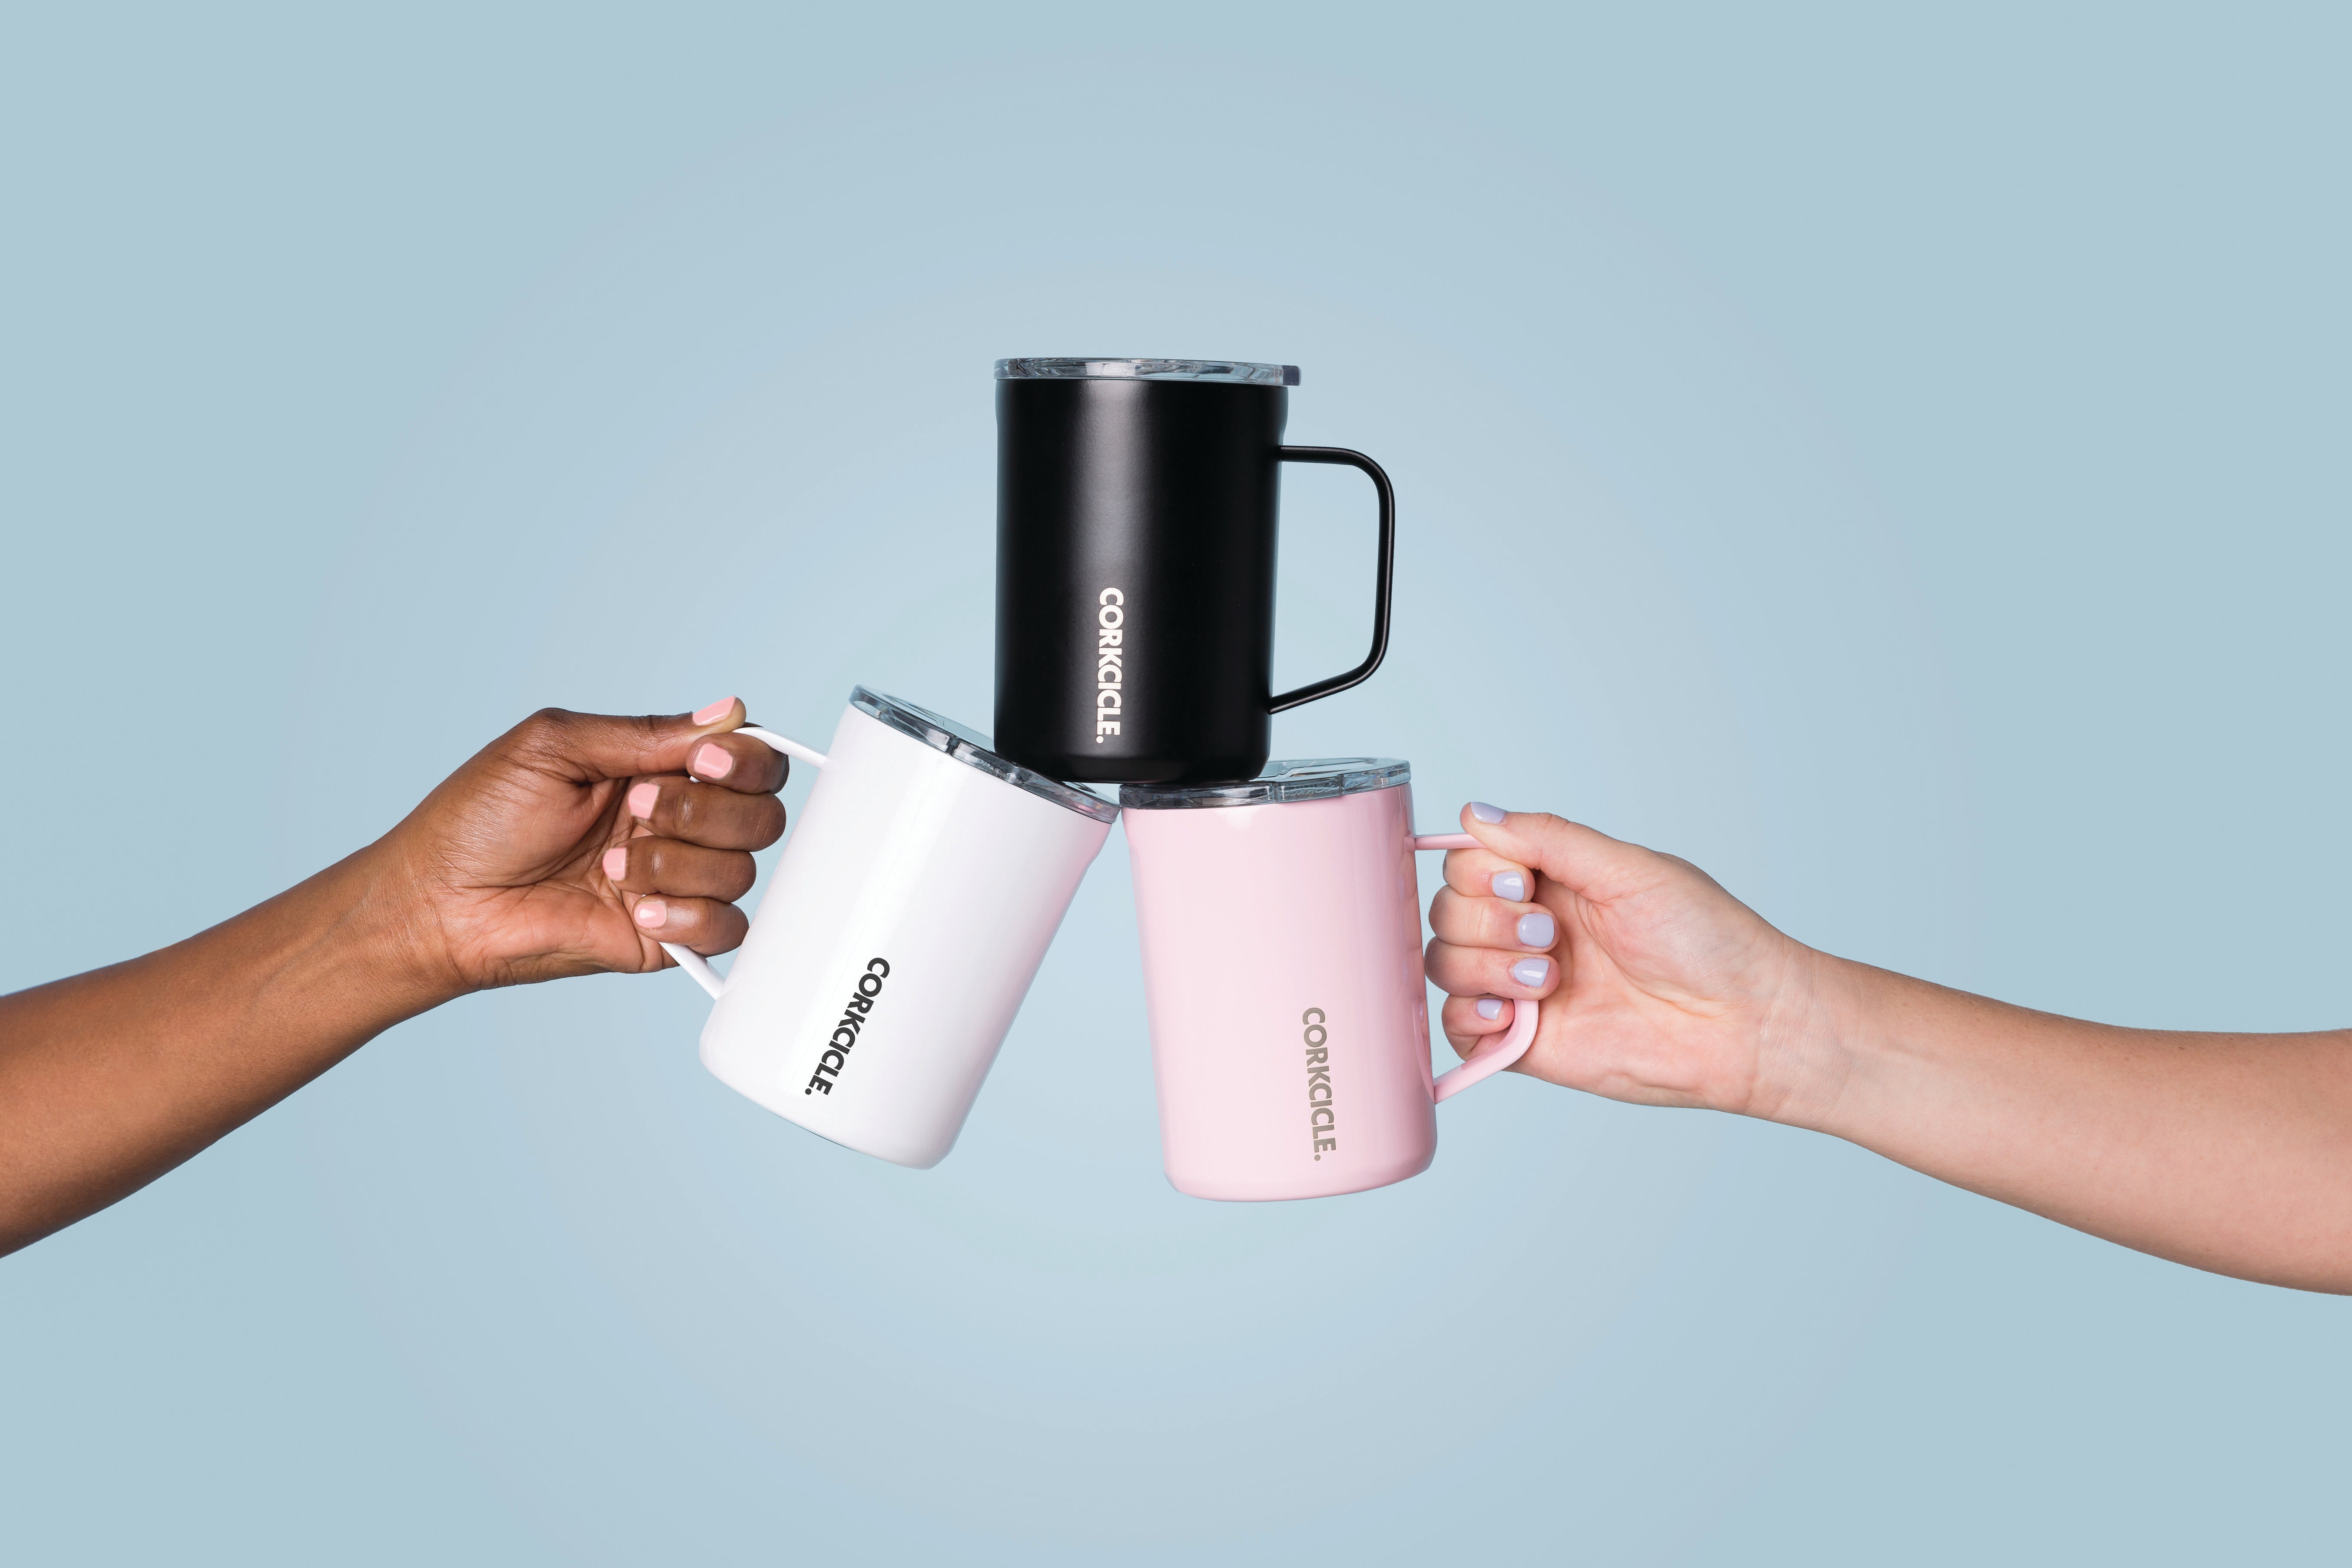 How To Organize Coffee Mugs, According To Pro Organizers